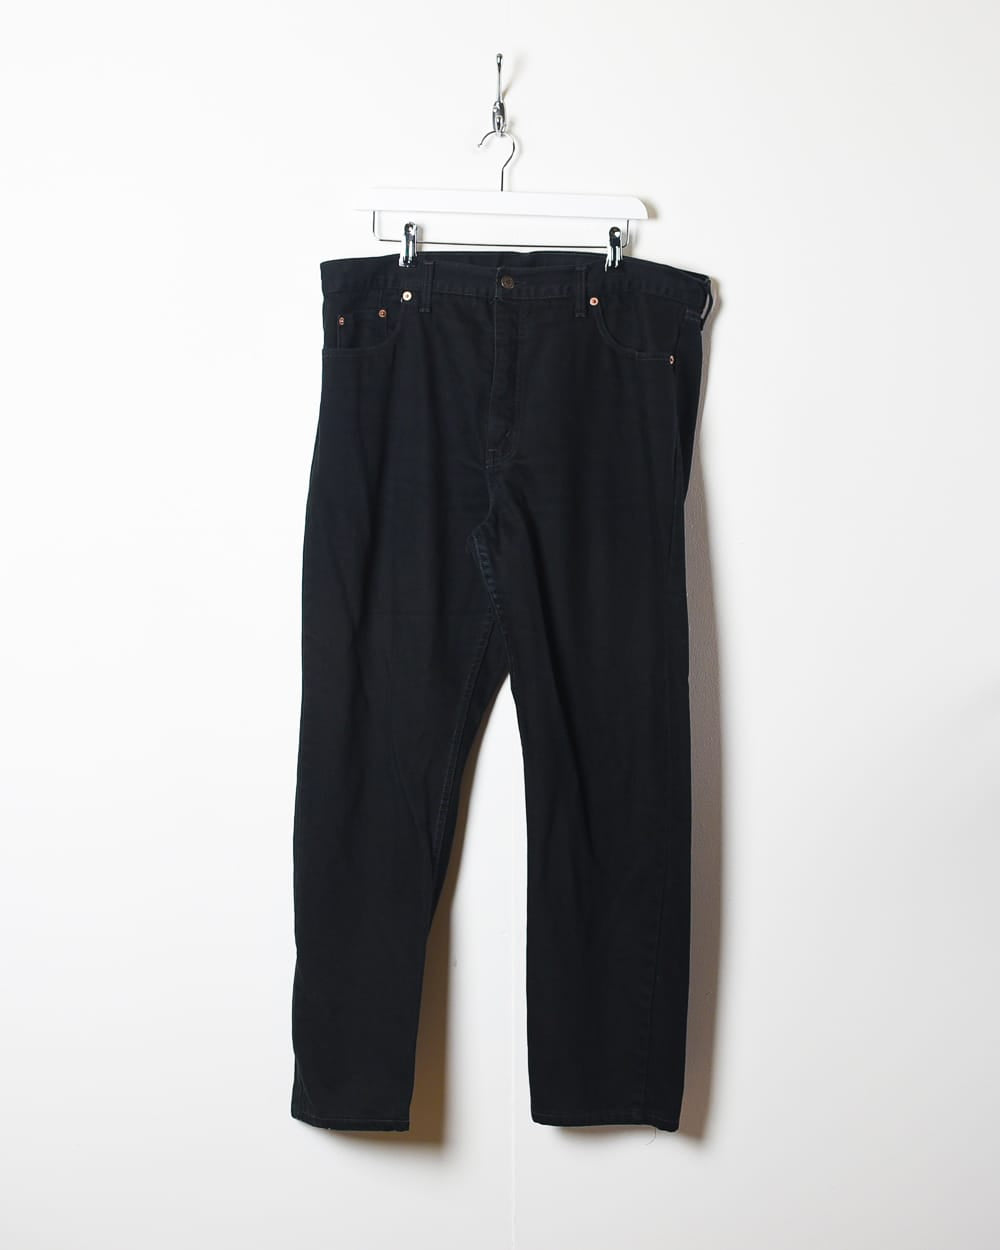 Black Levi's 615 Jeans - W38 L30